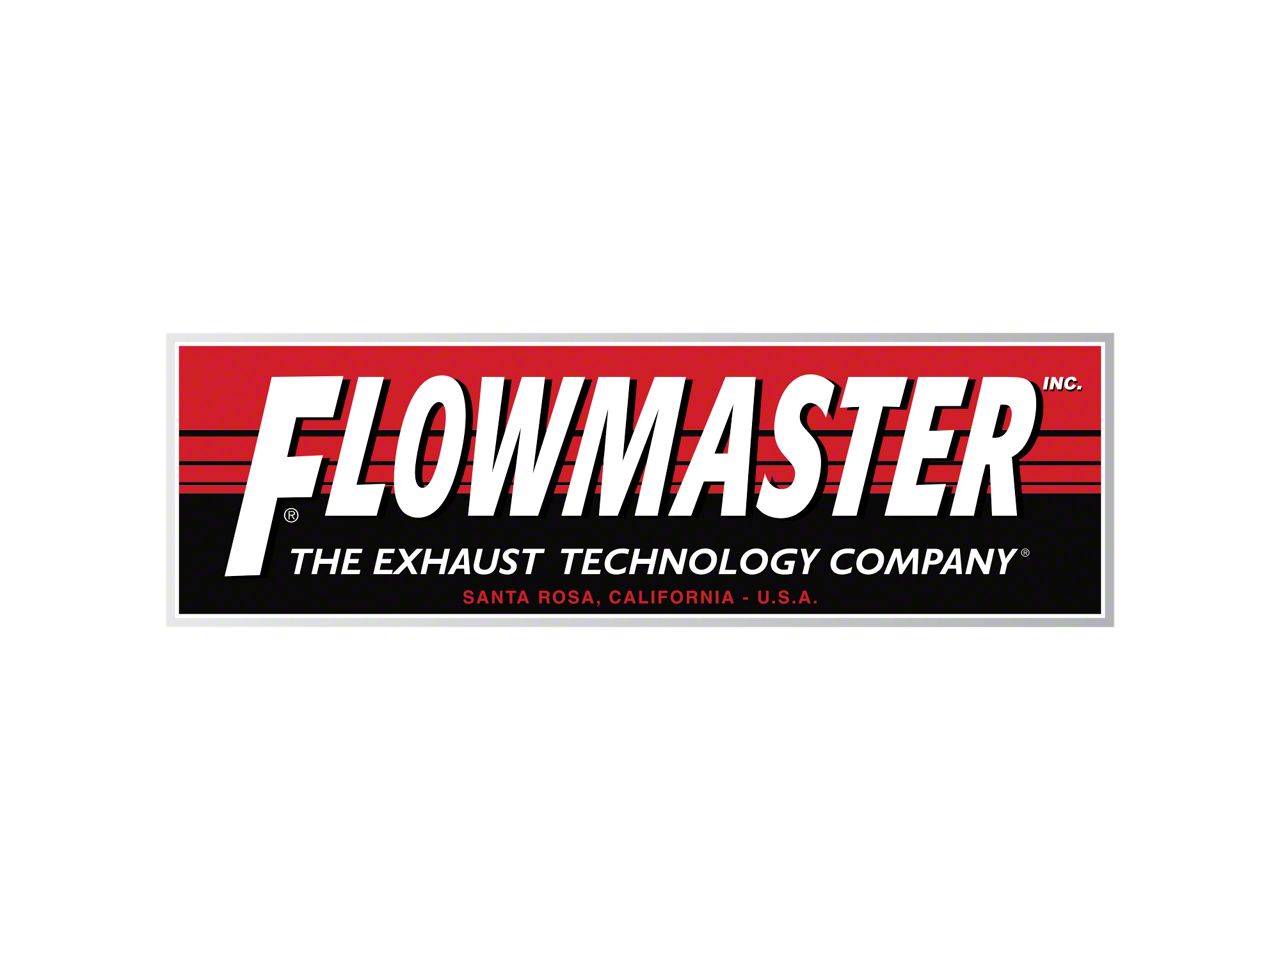 Flowmaster, Inc